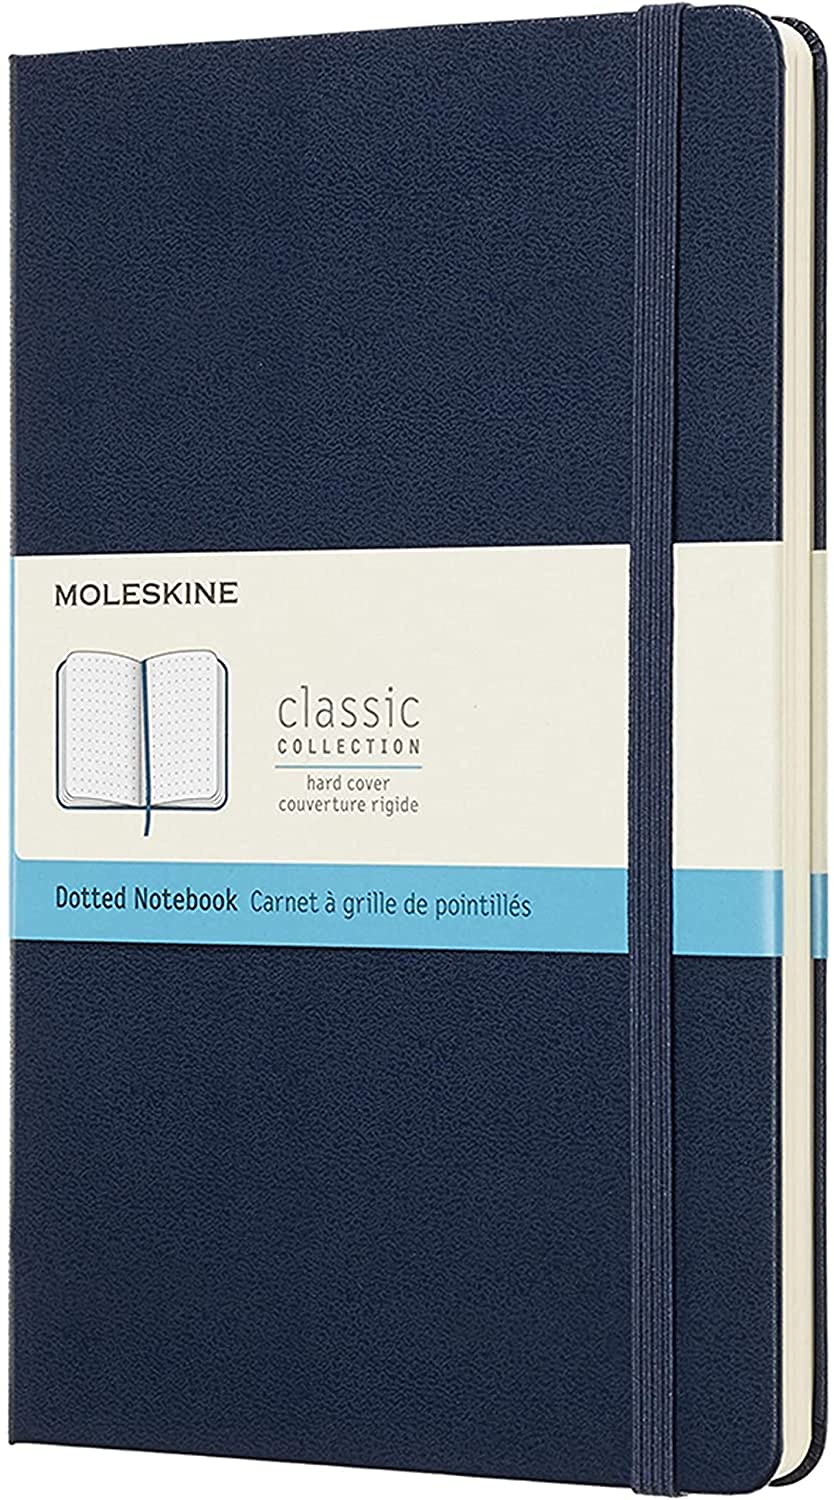 Carnet - Moleskine Classic - Dotted, Large, Hard Cover - Sapphire Blue | Moleskine image